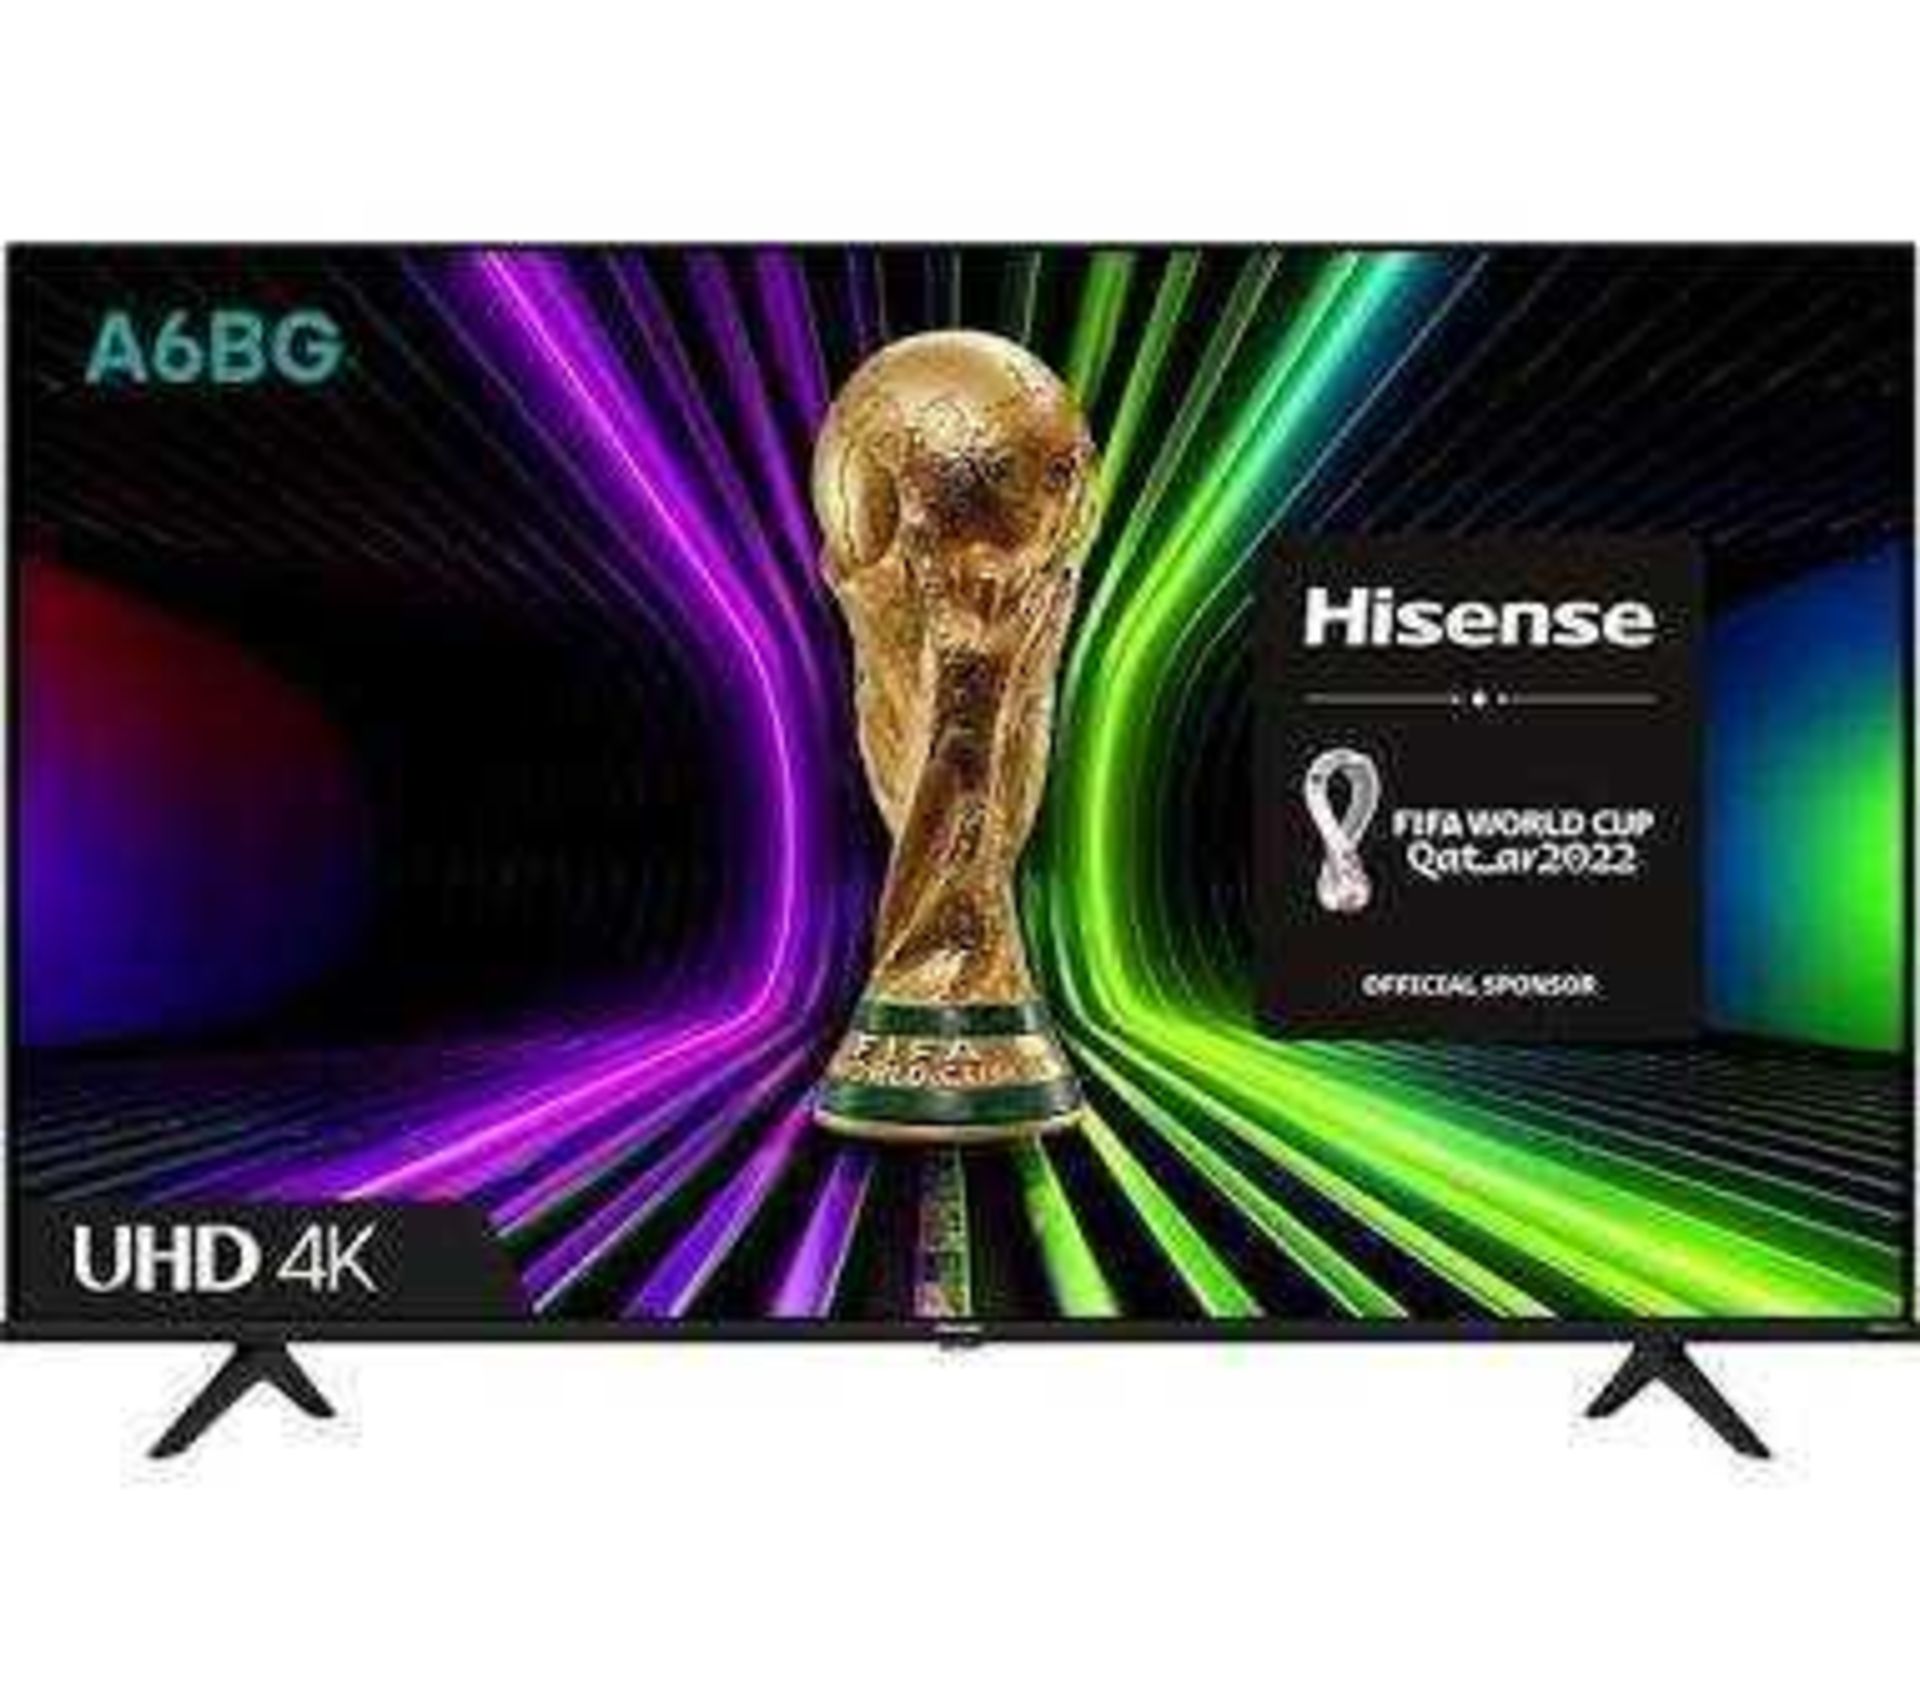 RRP £450 Boxed Hisense 50A6Egtuk 50" 4K Smart Tv (No Visible Damage)